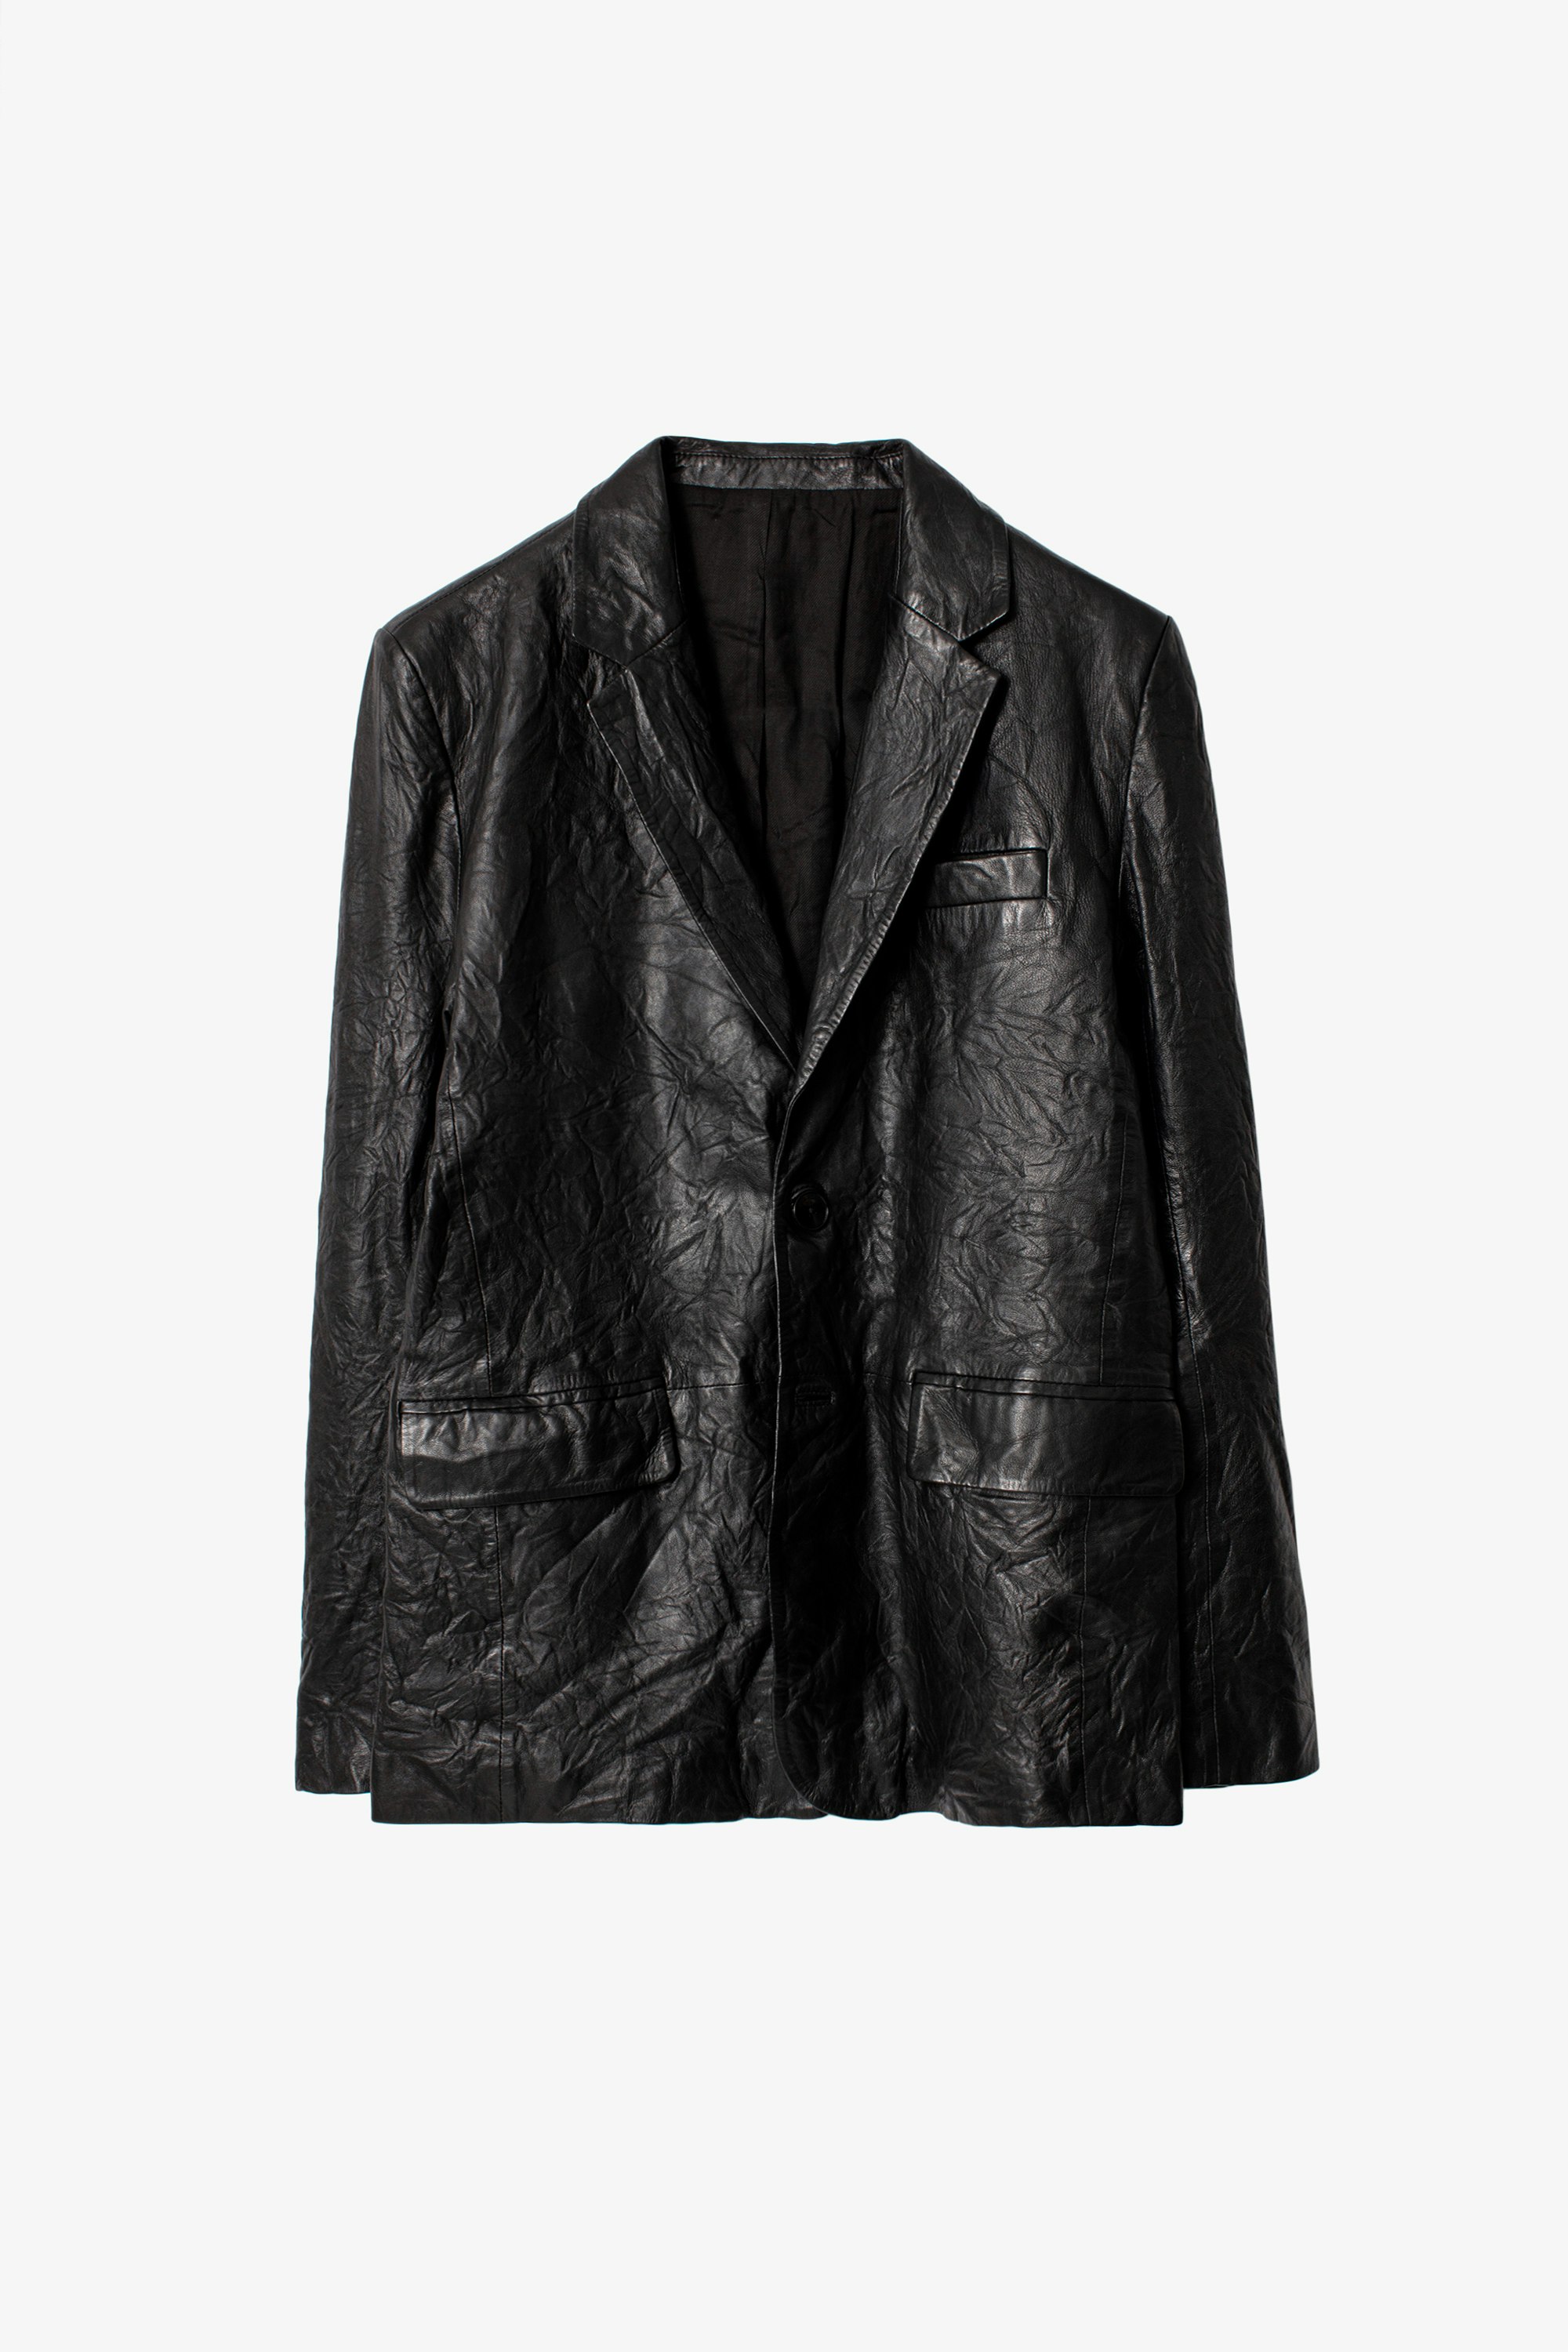 Blazer Valfried Crinkle Leather - Chaqueta sastre negra de piel arrugada.